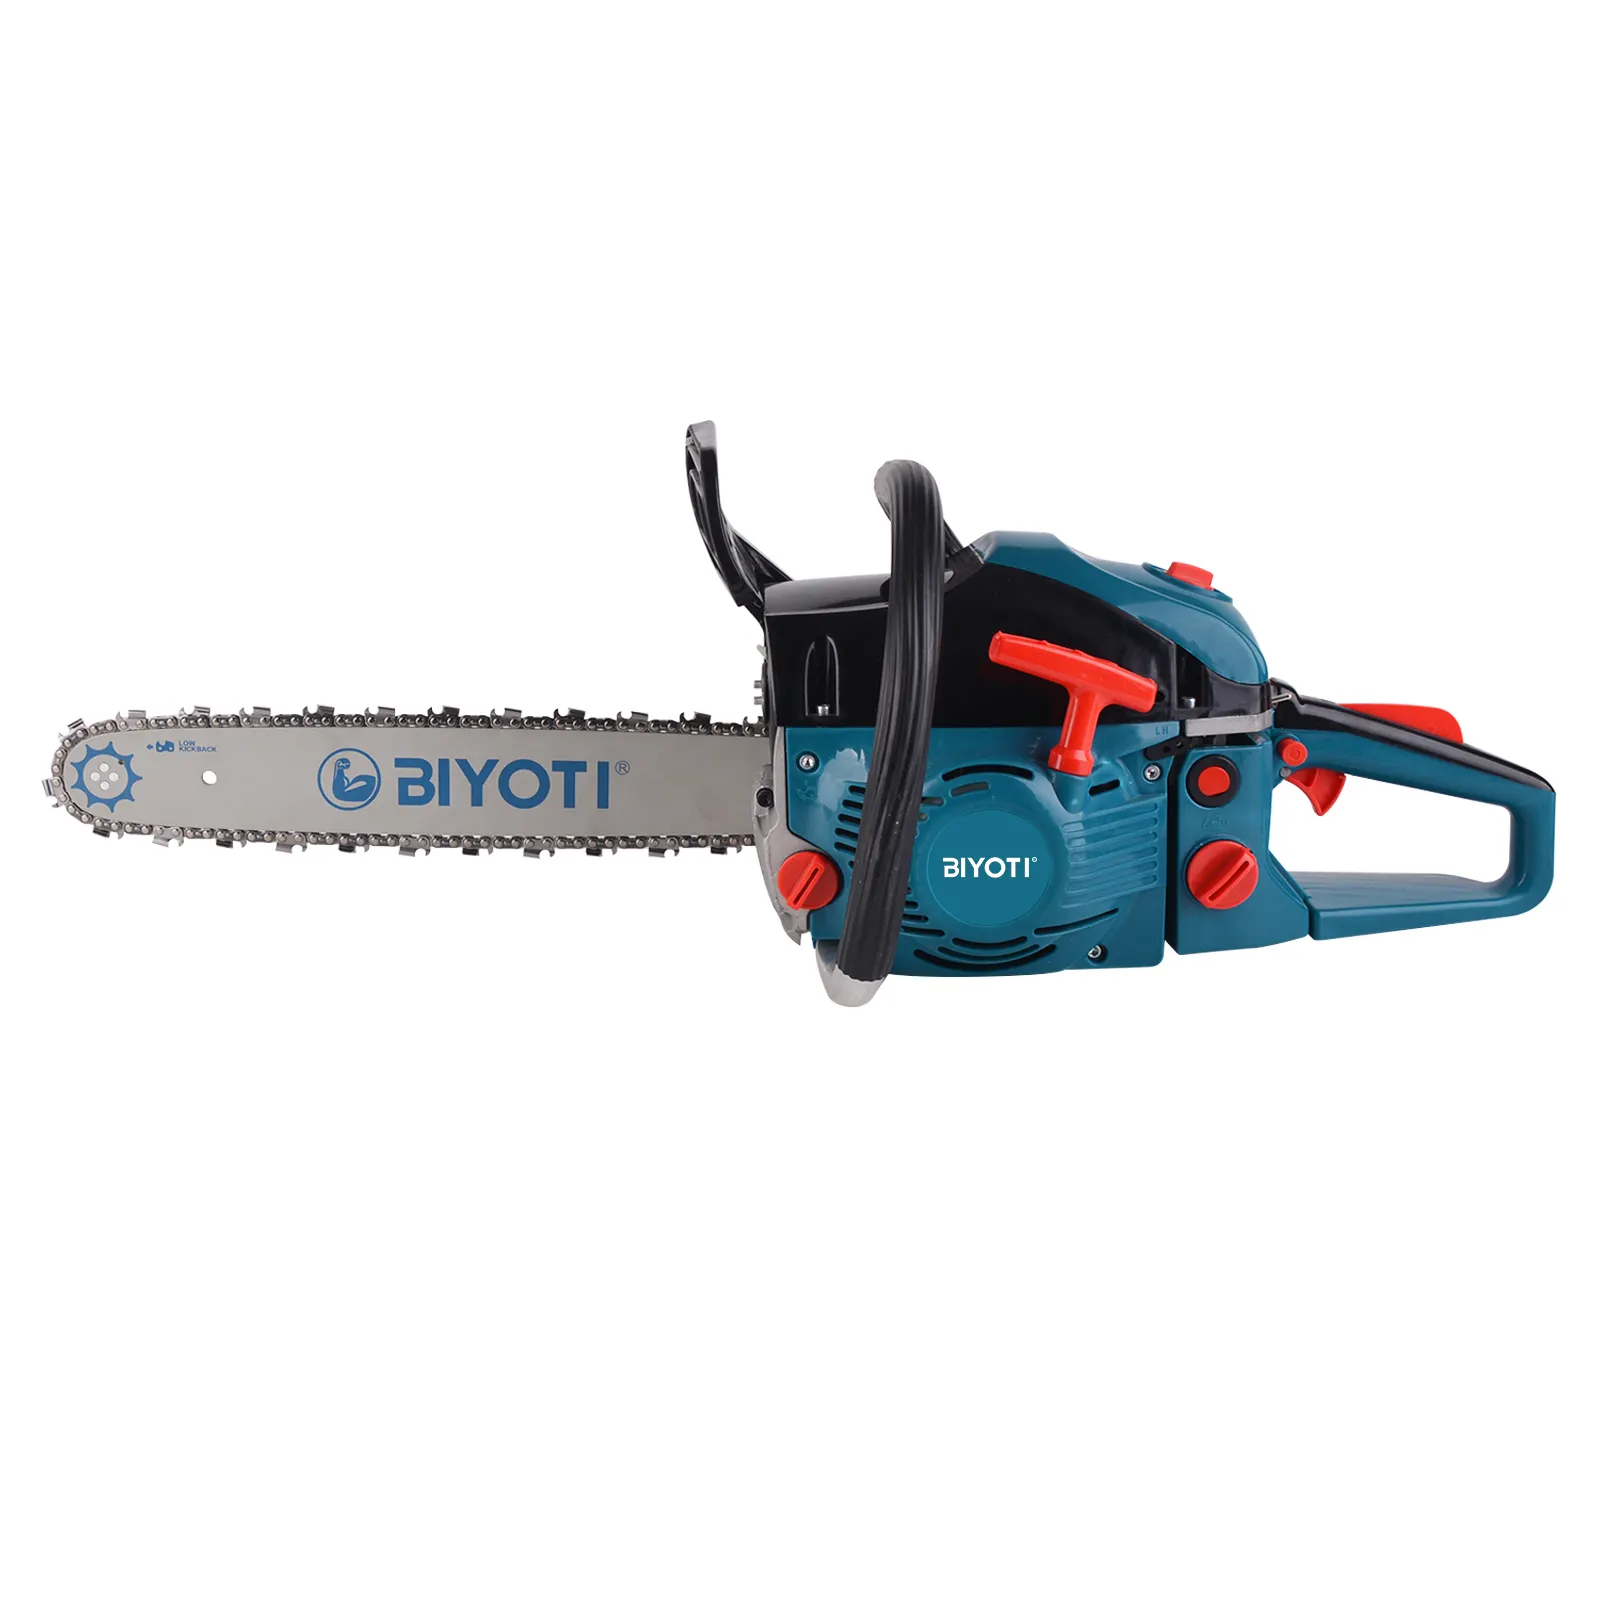 BIYOTI 18.20.22inch Garden Tools Gasoline Power Chain Saw 5800 Wood Tree Cutting Machine Petrol Chainsaws Professional